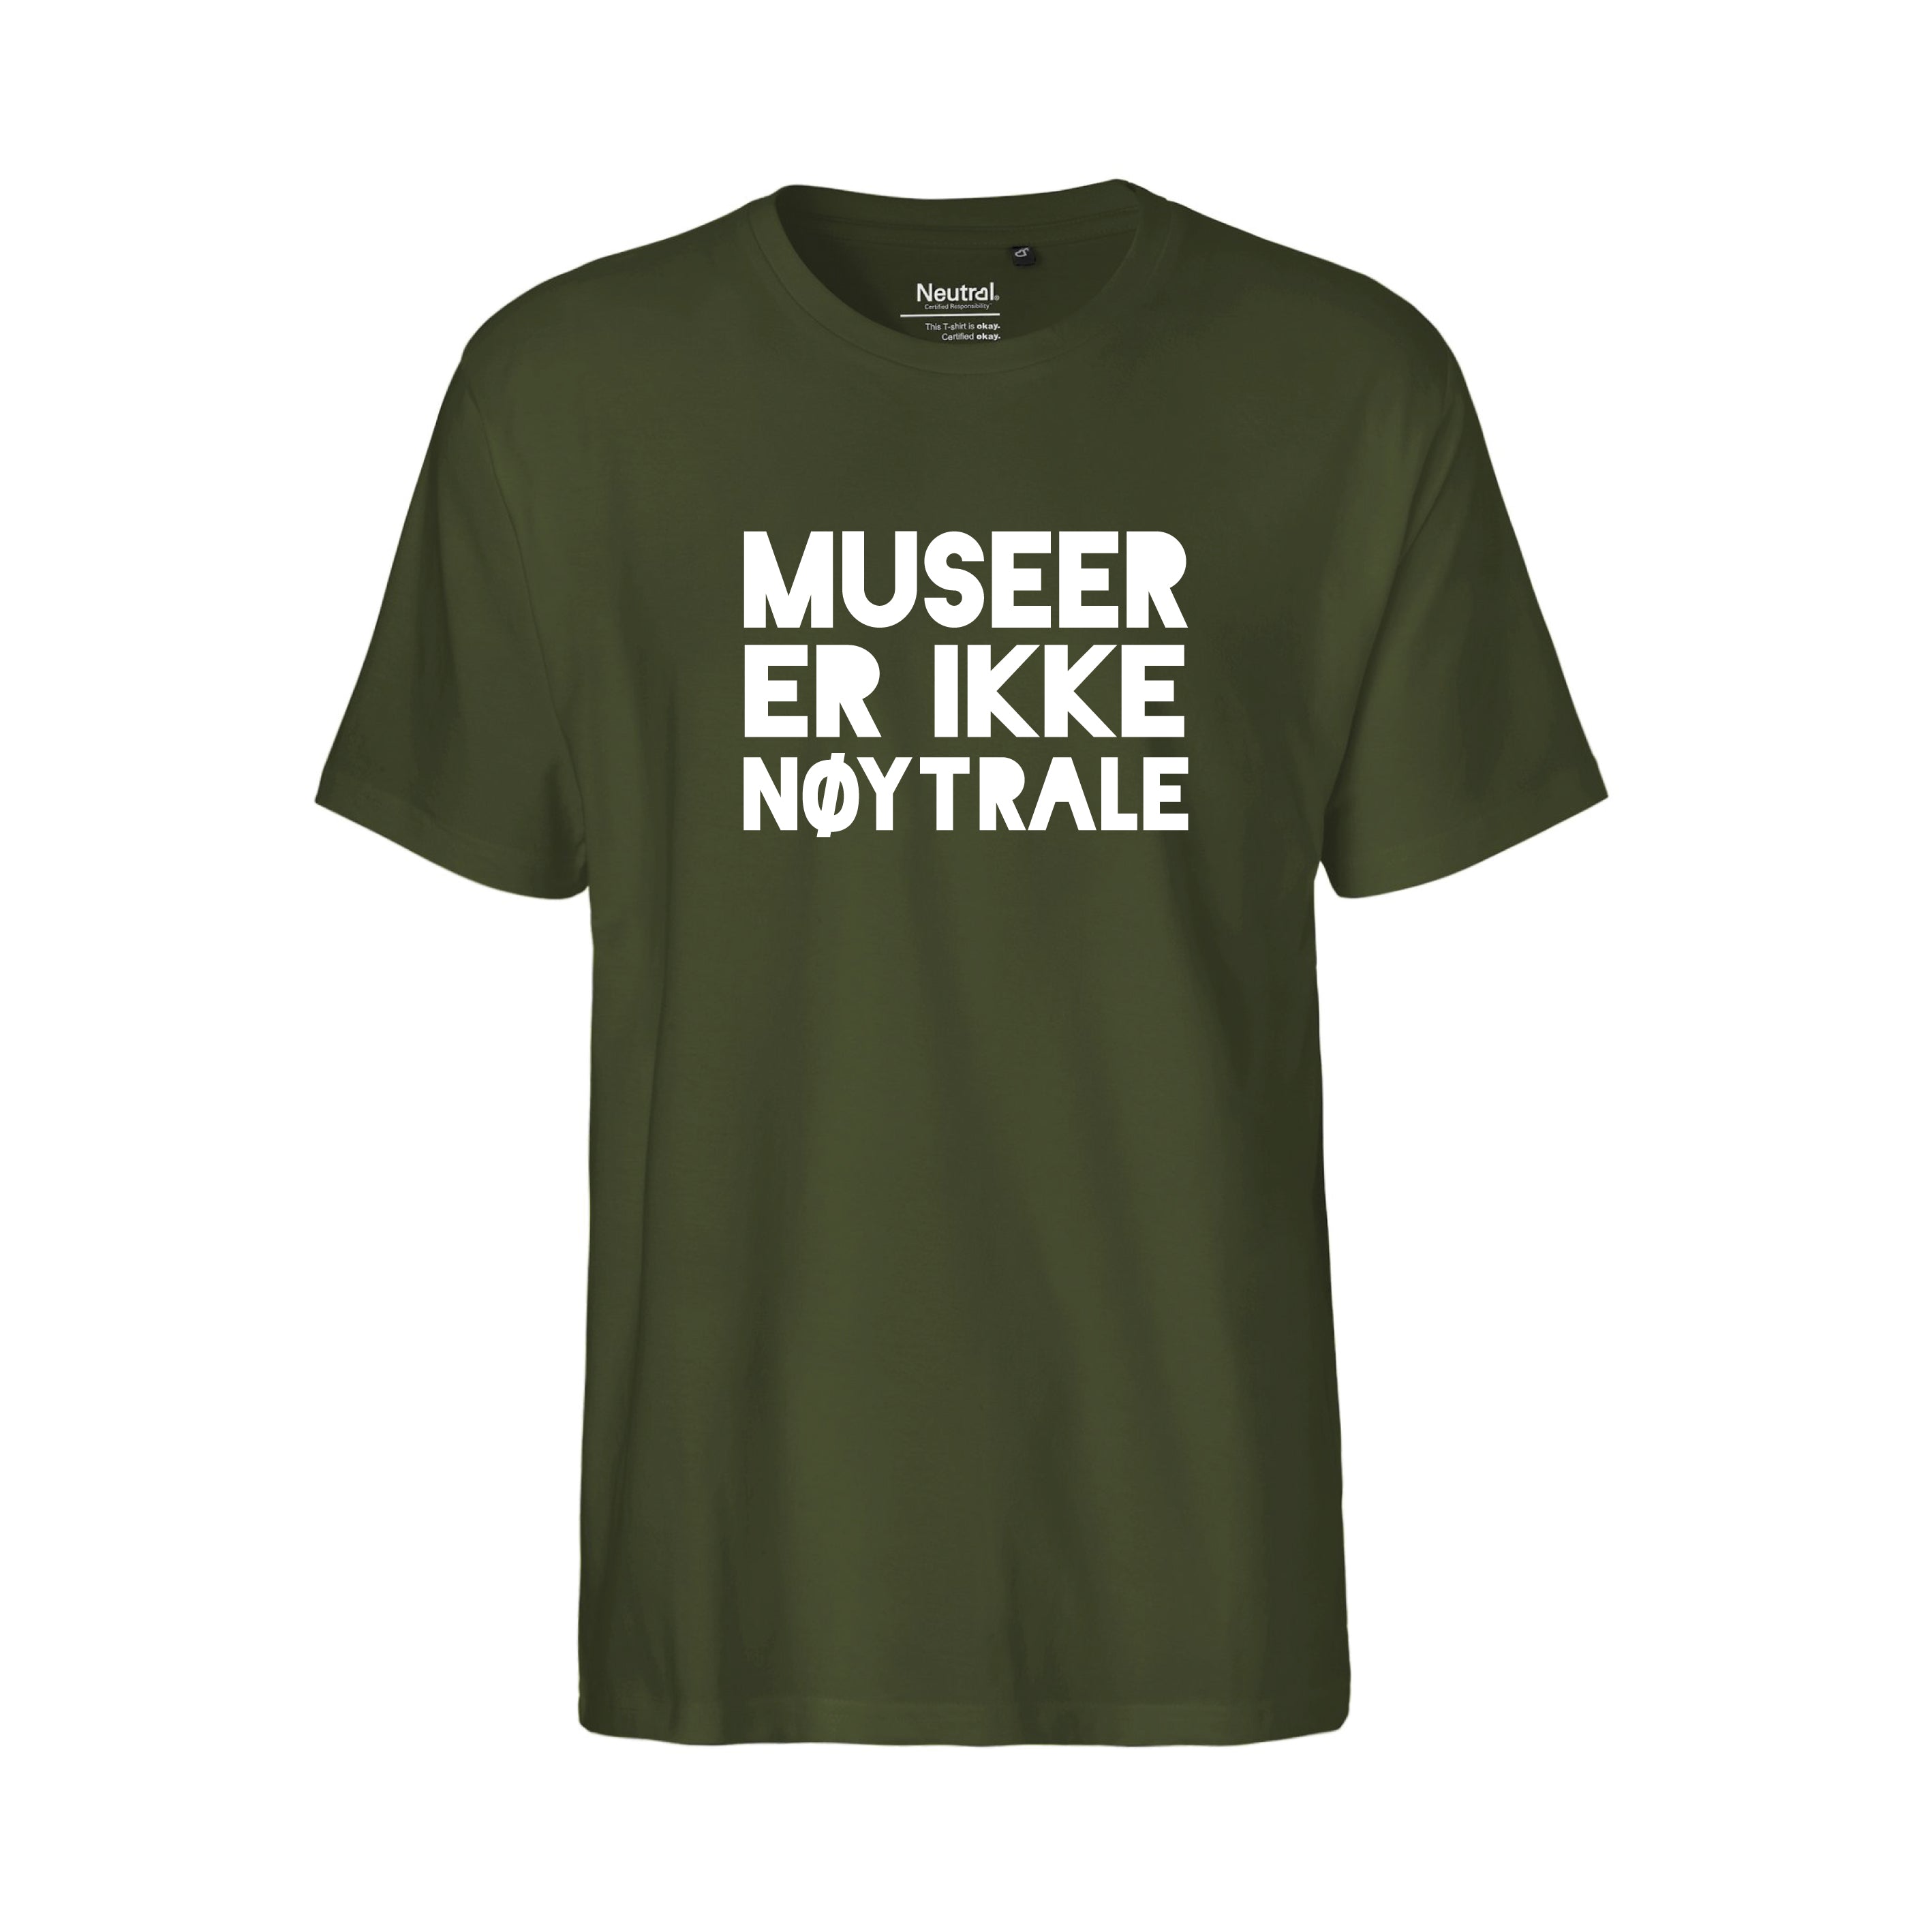 Museer er ikke nøytrale - T-shirt - Military Green